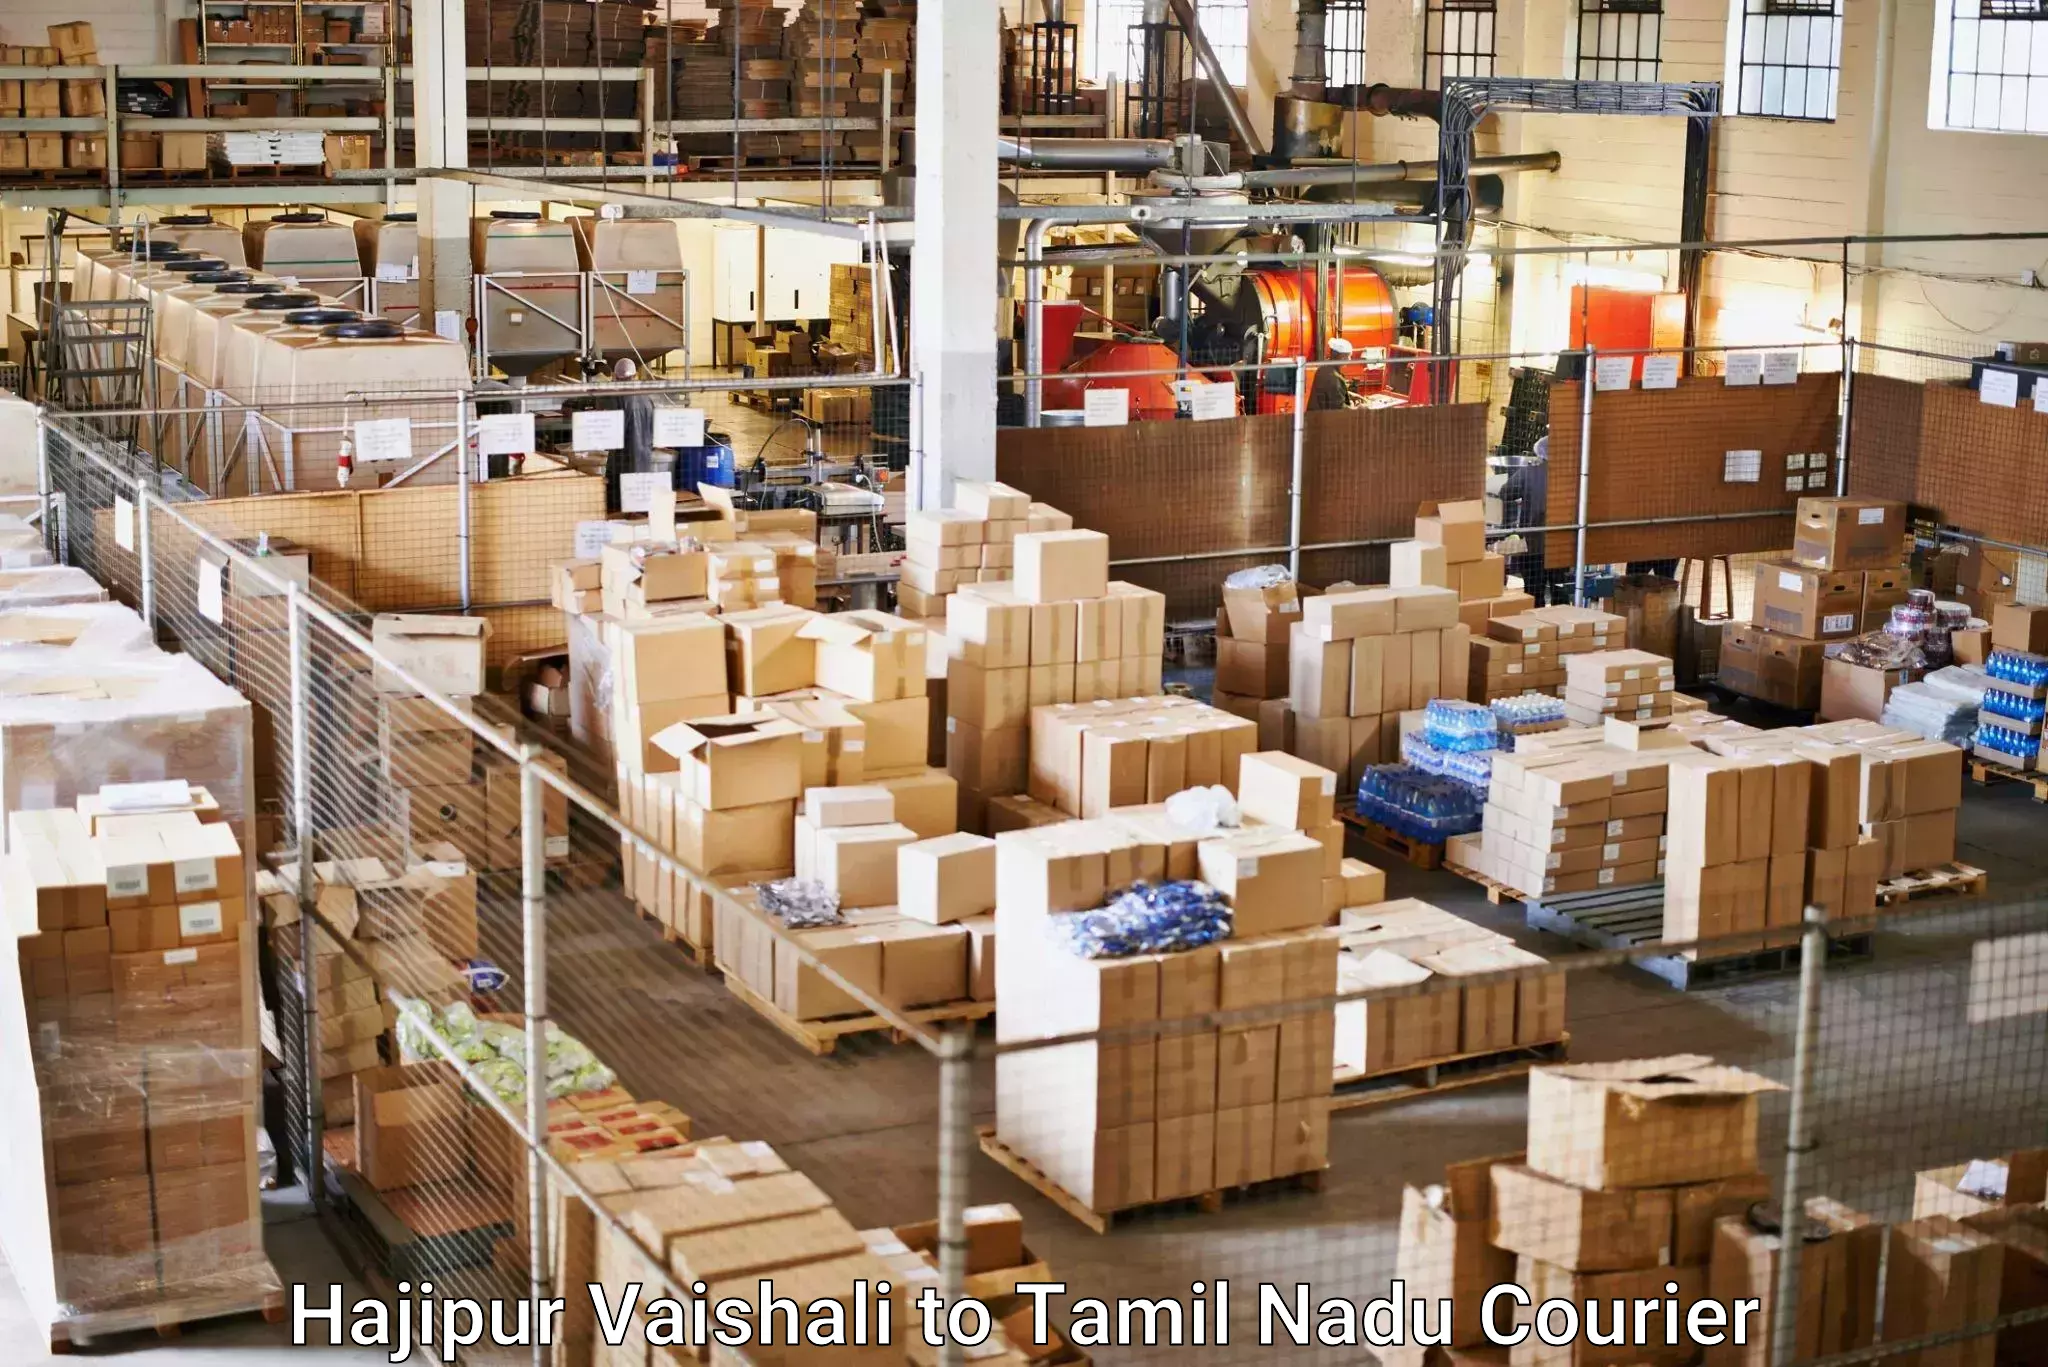 Express shipping Hajipur Vaishali to Thiruvadanai